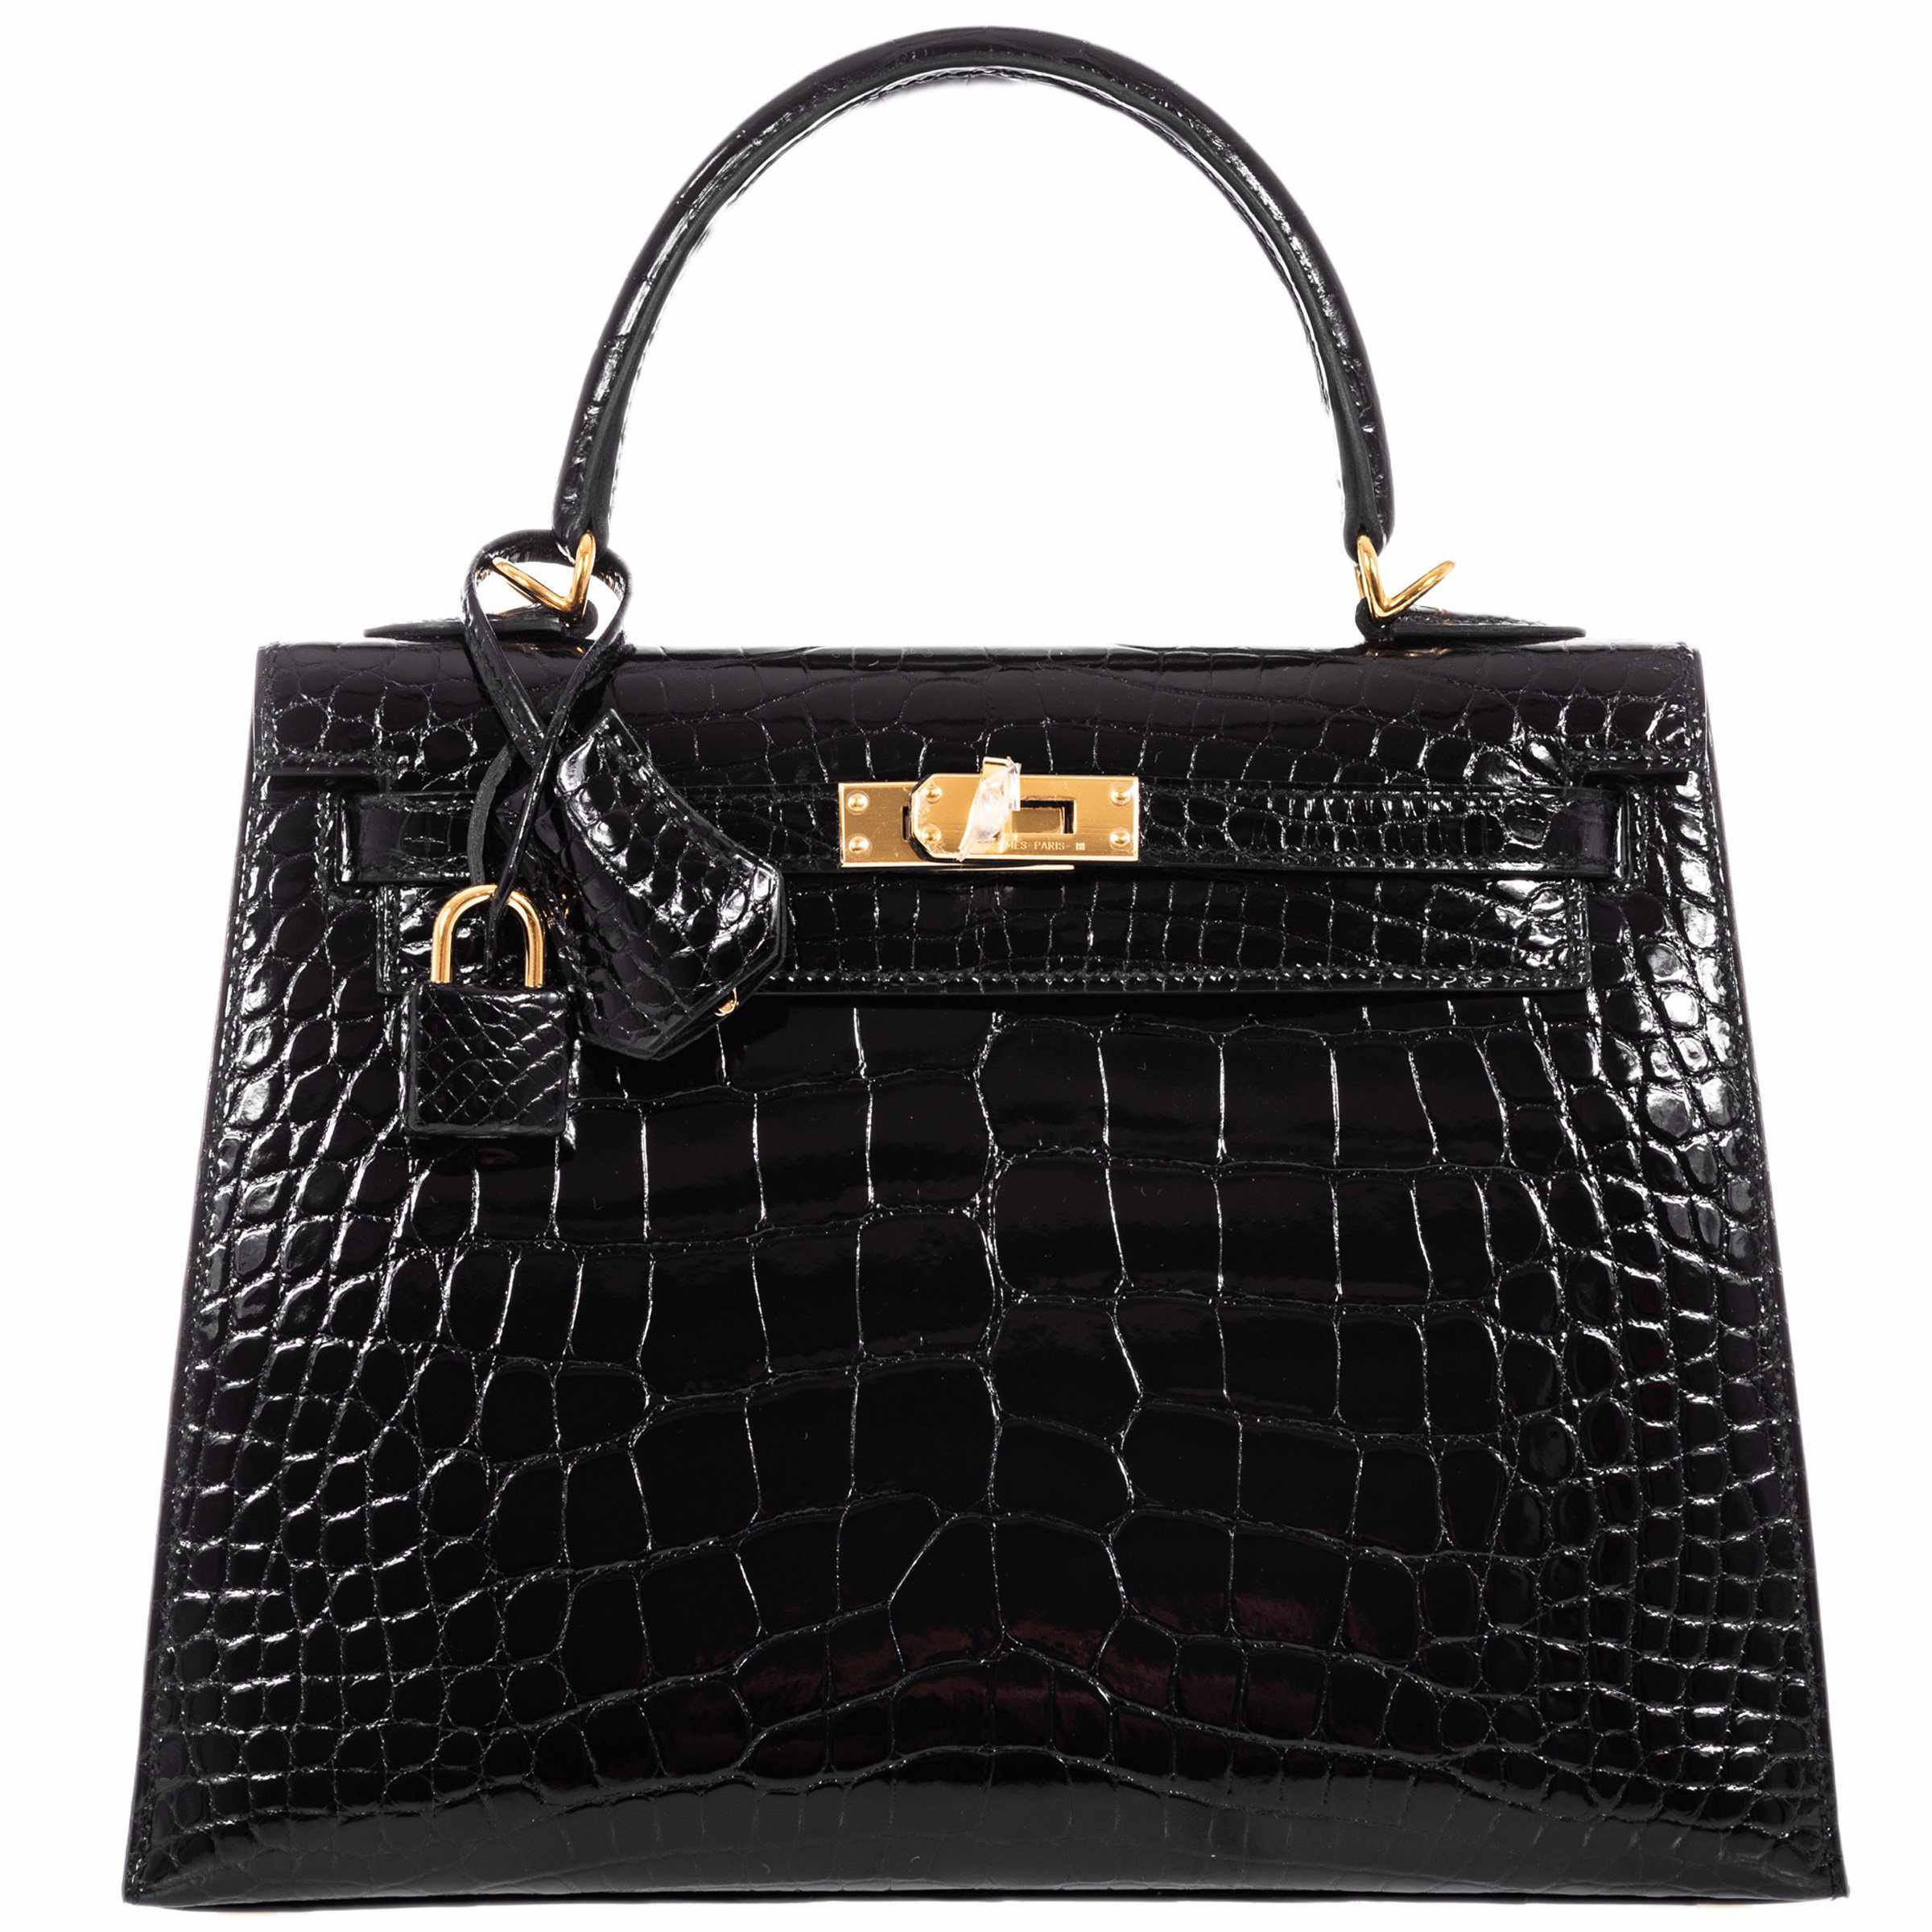 Hermès Kelly 25 Sellier Black Alligator Gold Hardware - Very Special